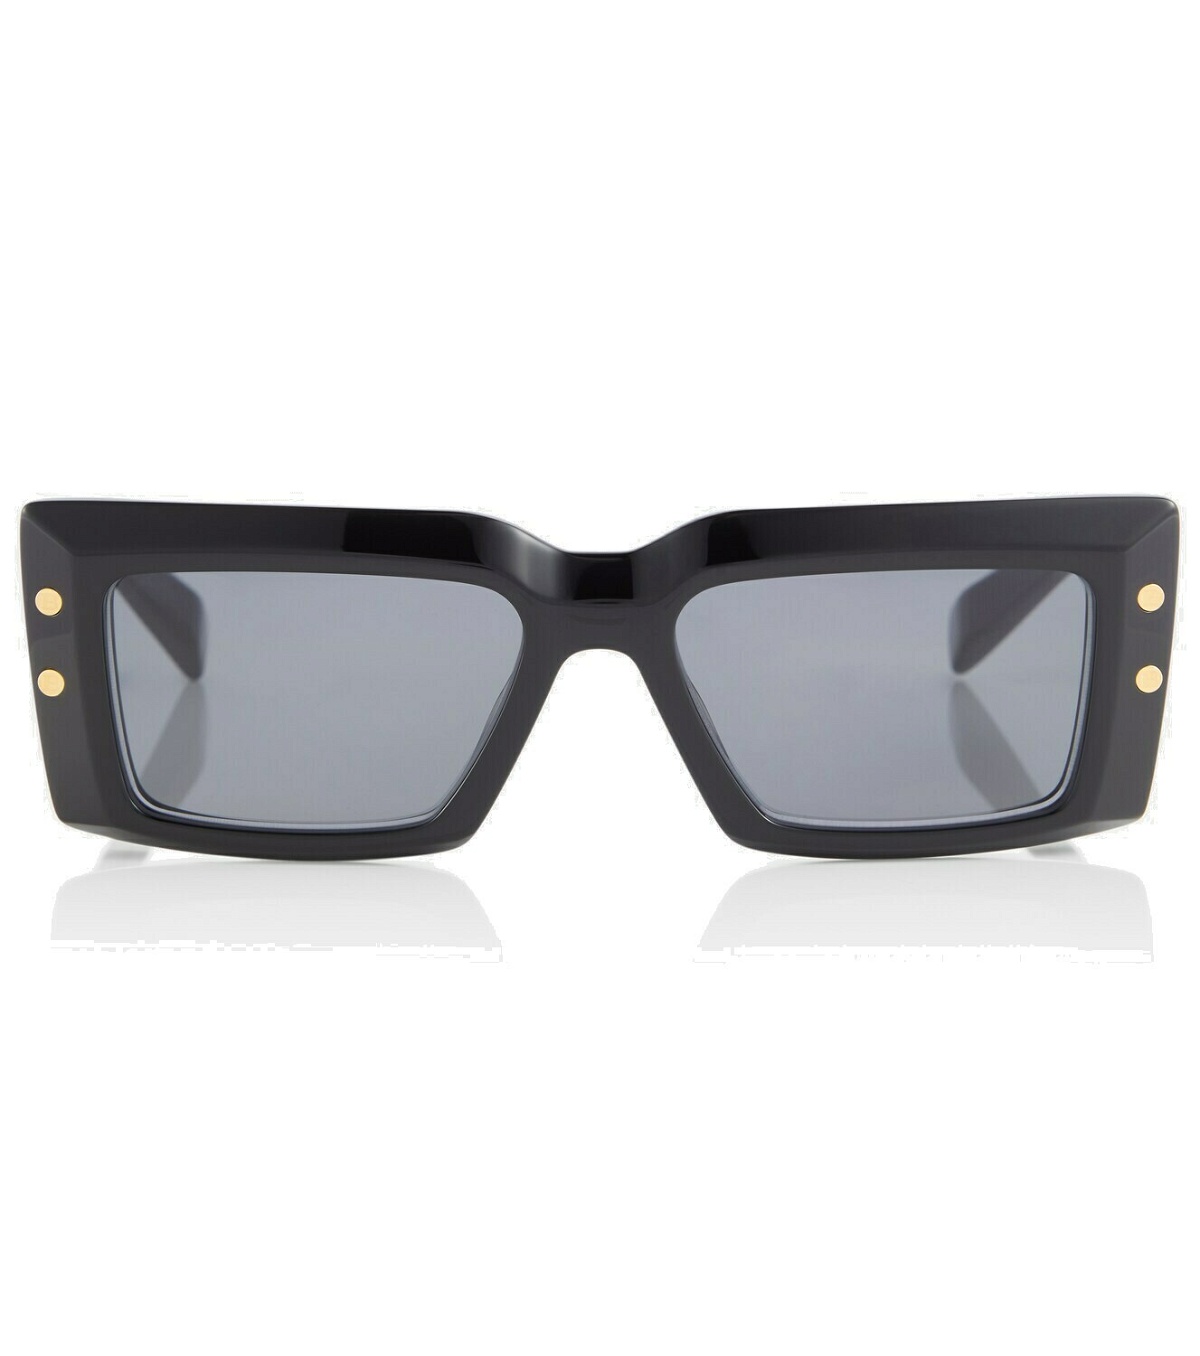 Balmain Imperial rectangular sunglasses Balmain